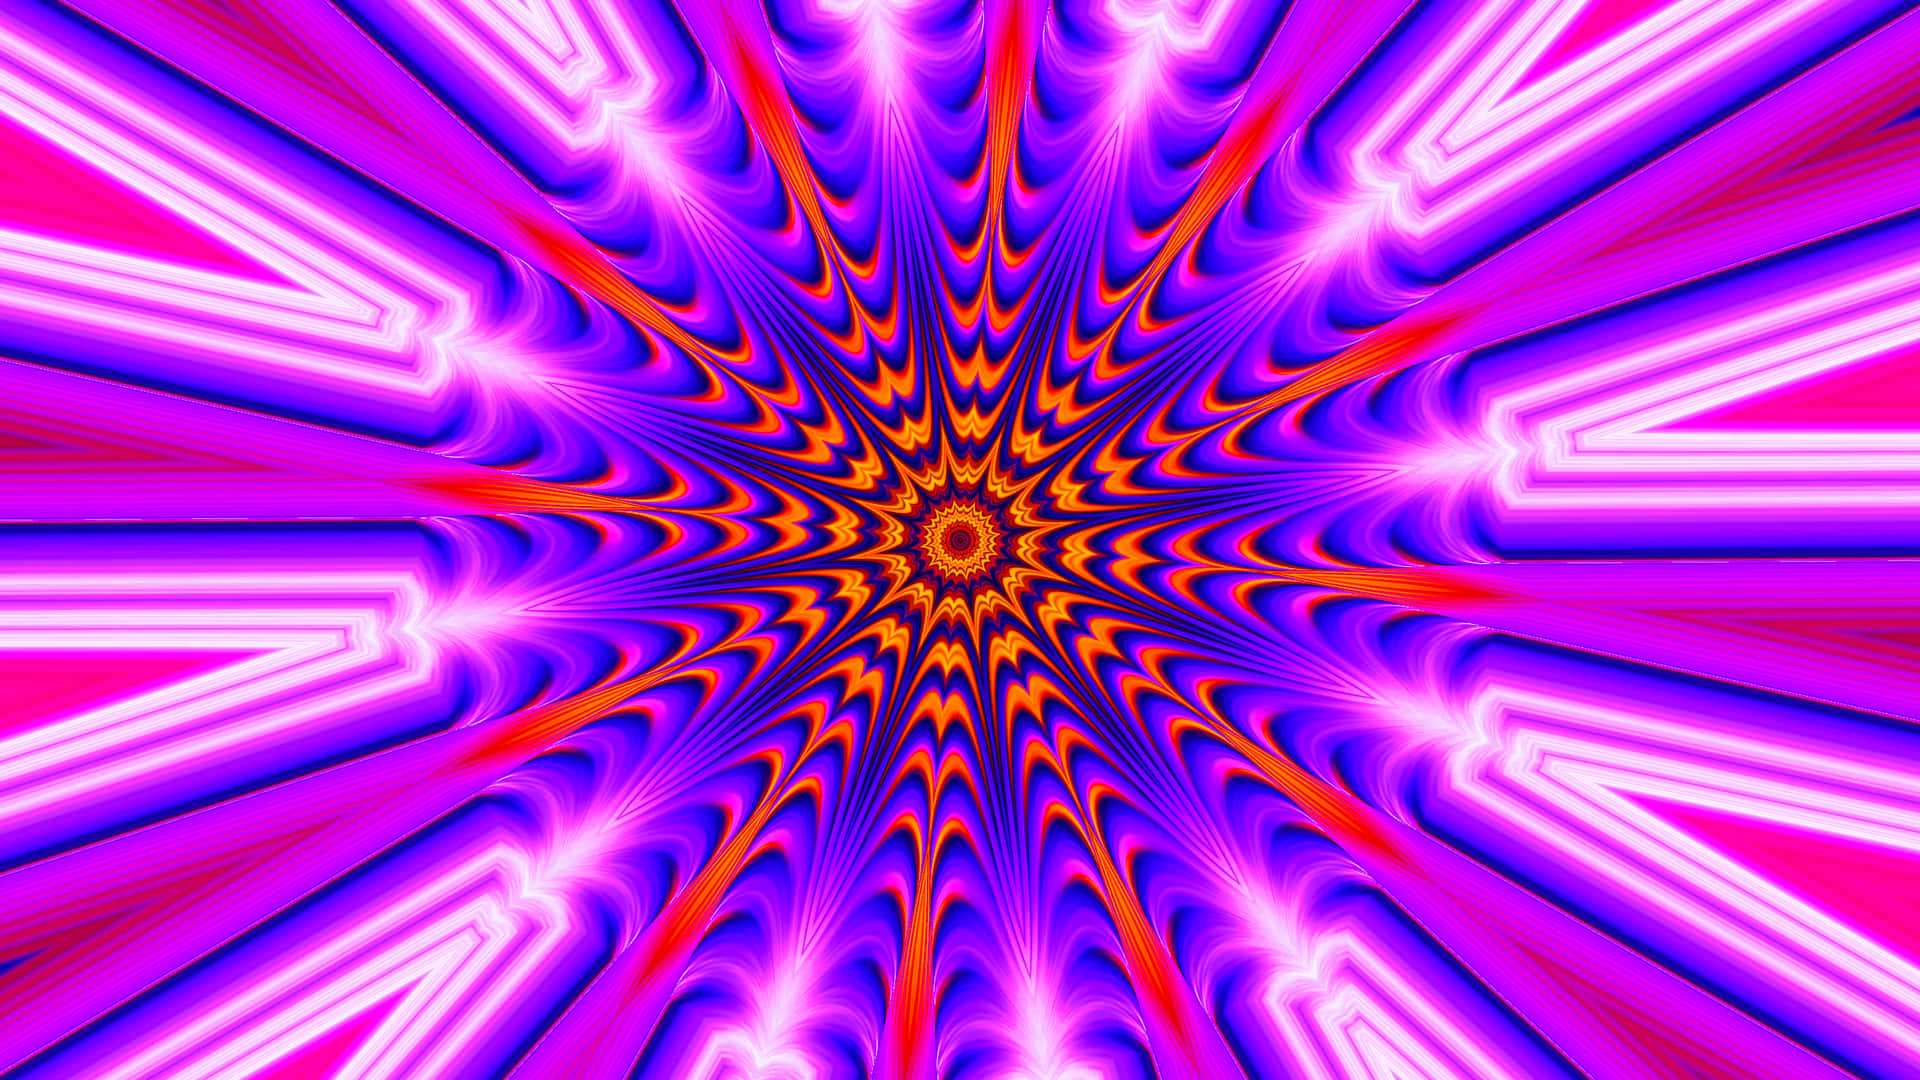 Ilusõesópticas Incríveis Espiral Psicodélica. Papel de Parede